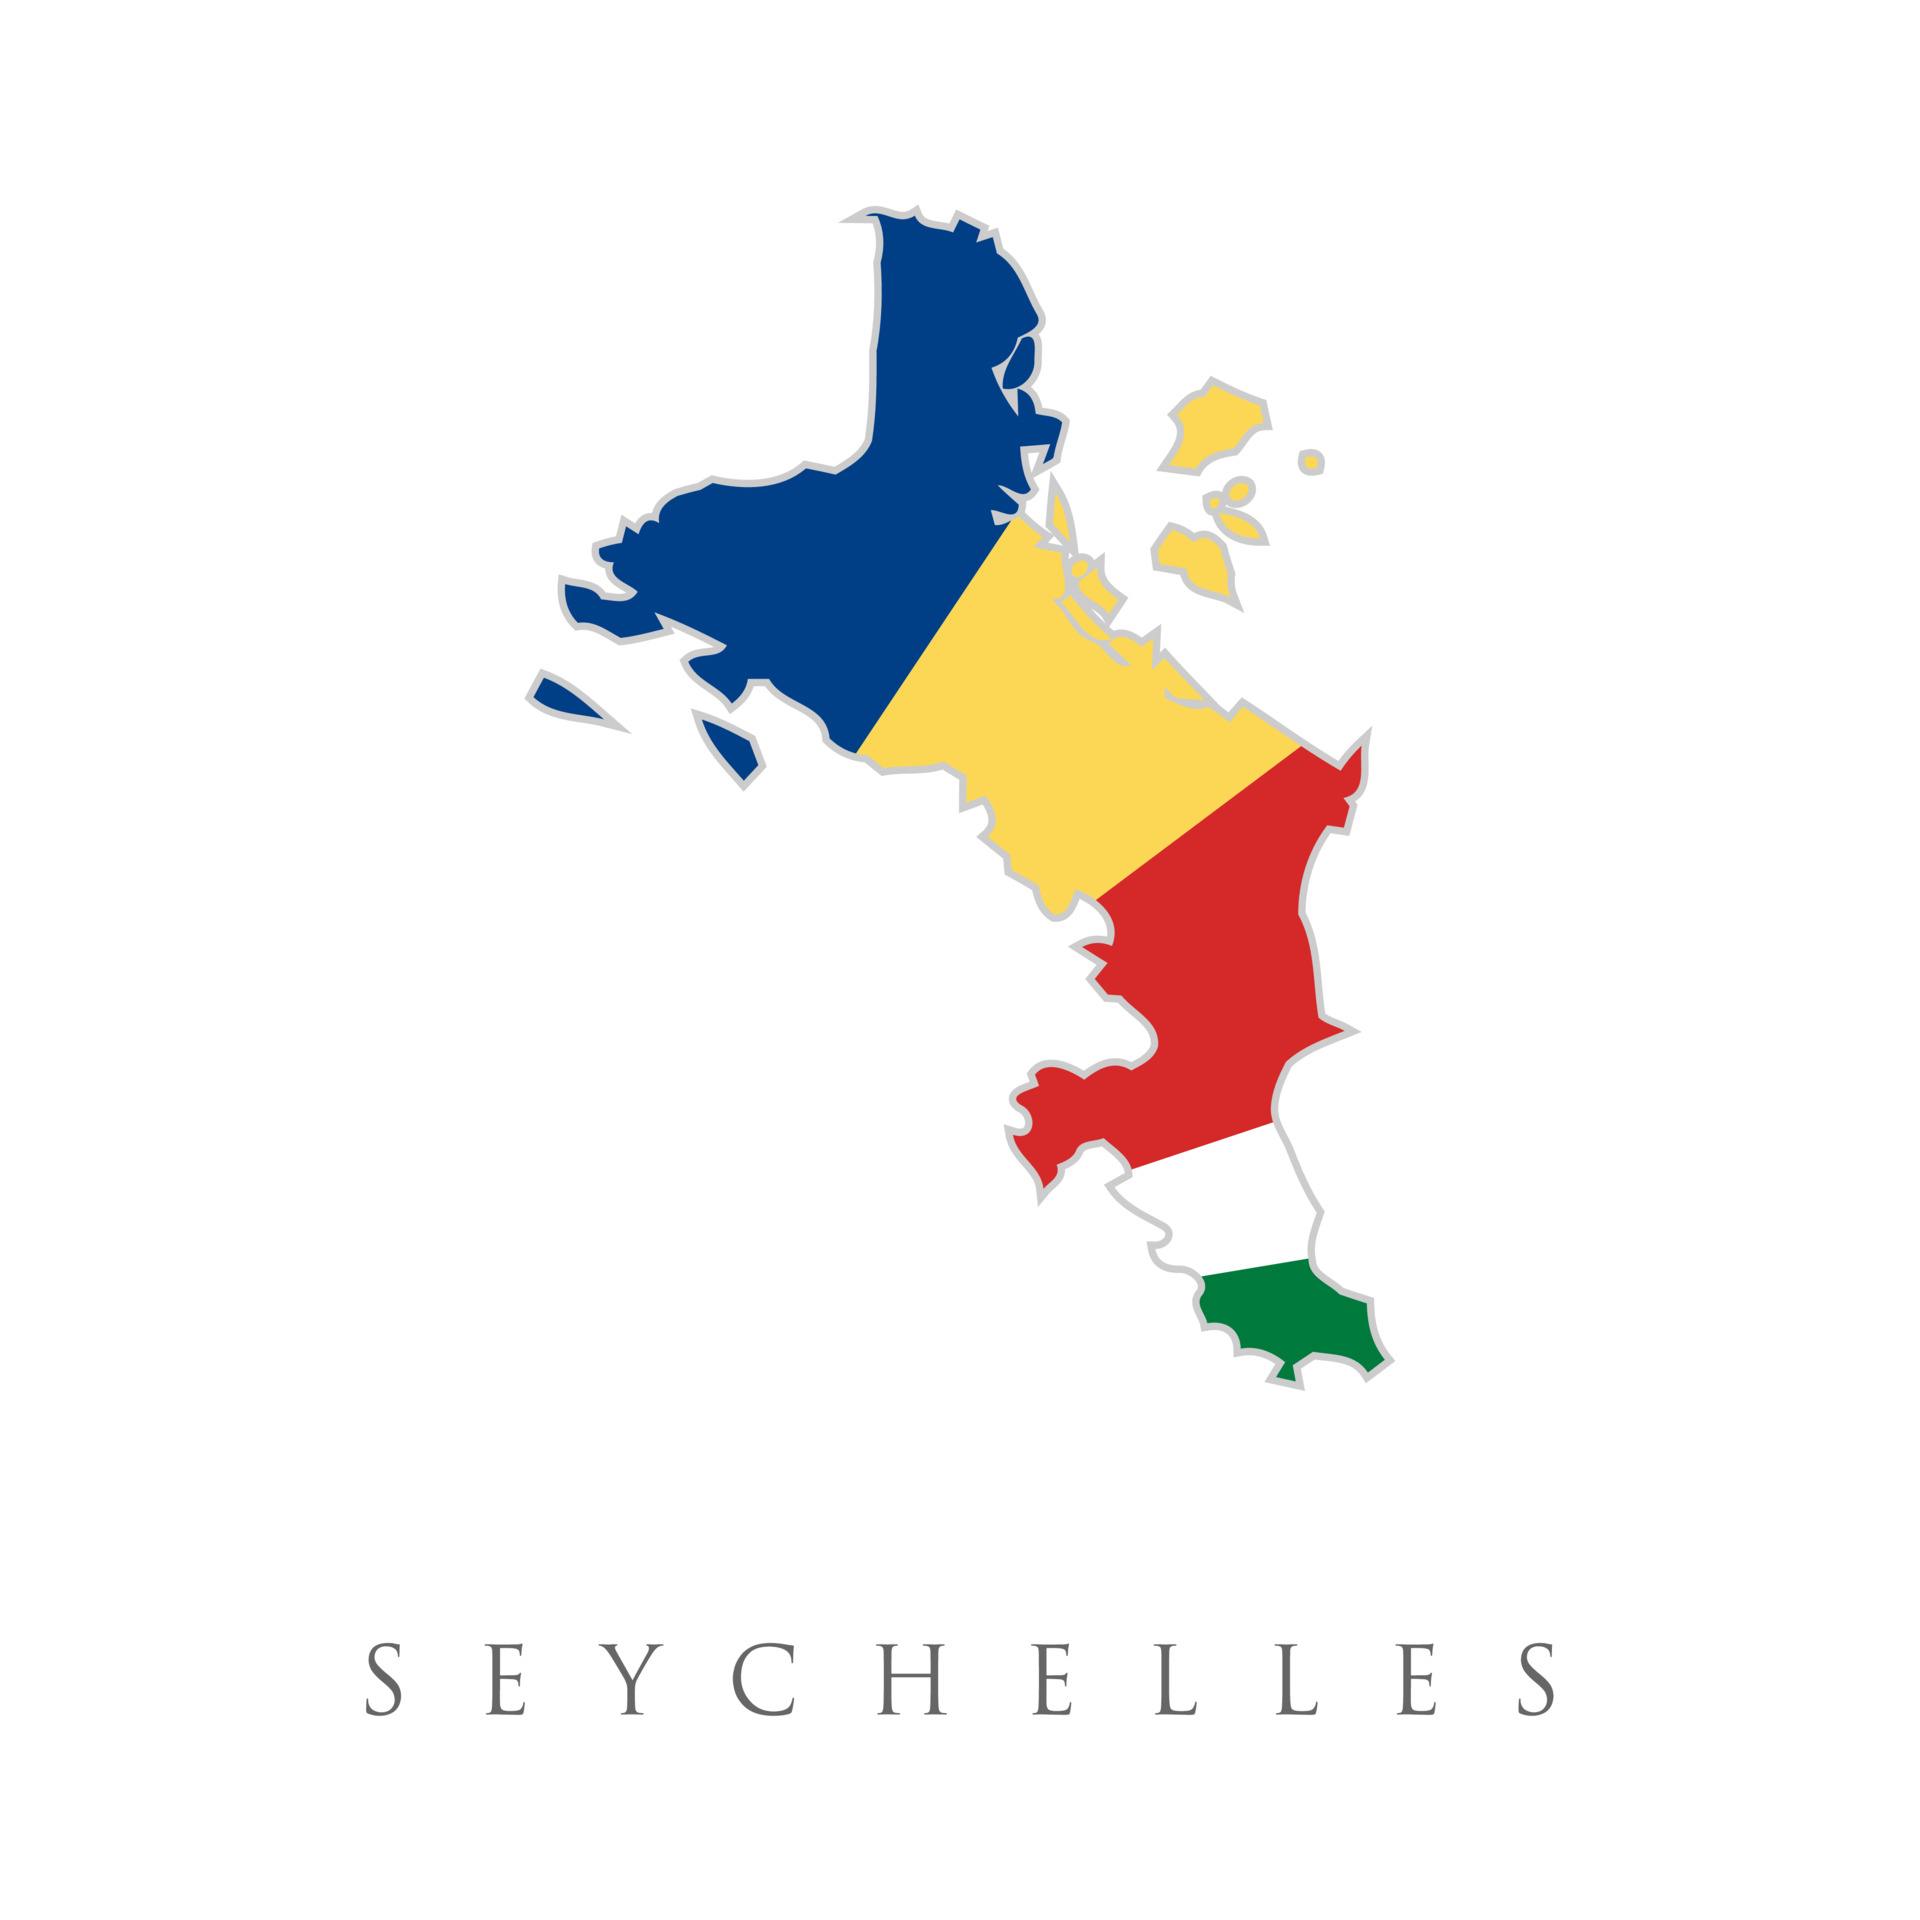 Seychelles National Map of Republic of Seychelles